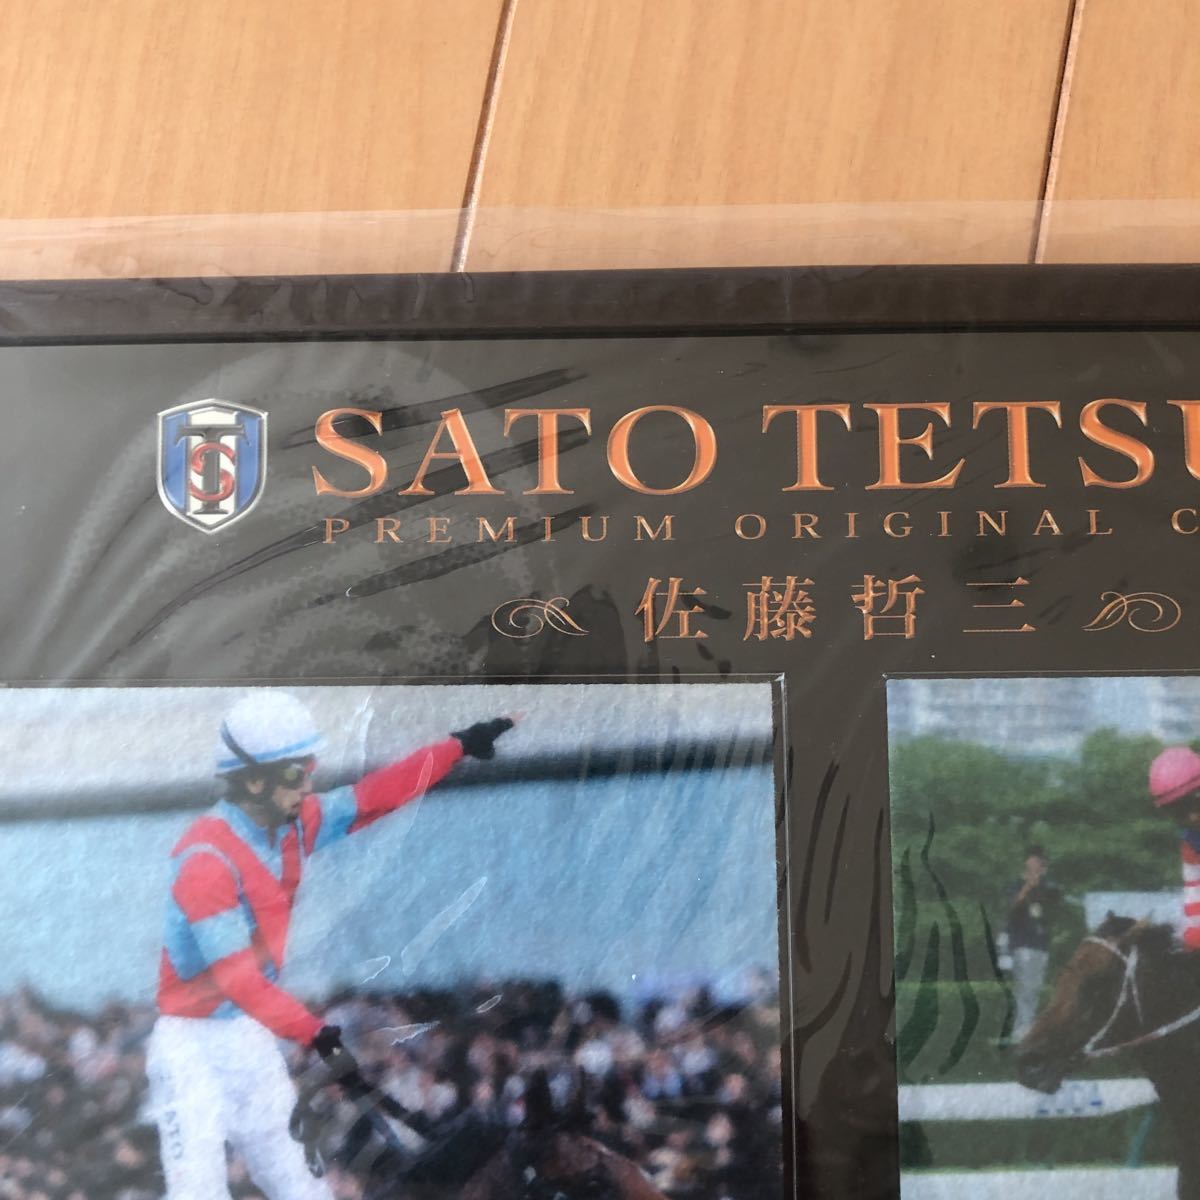  Sato . three origin . hand. ni can sport Special made premium Coaster set 